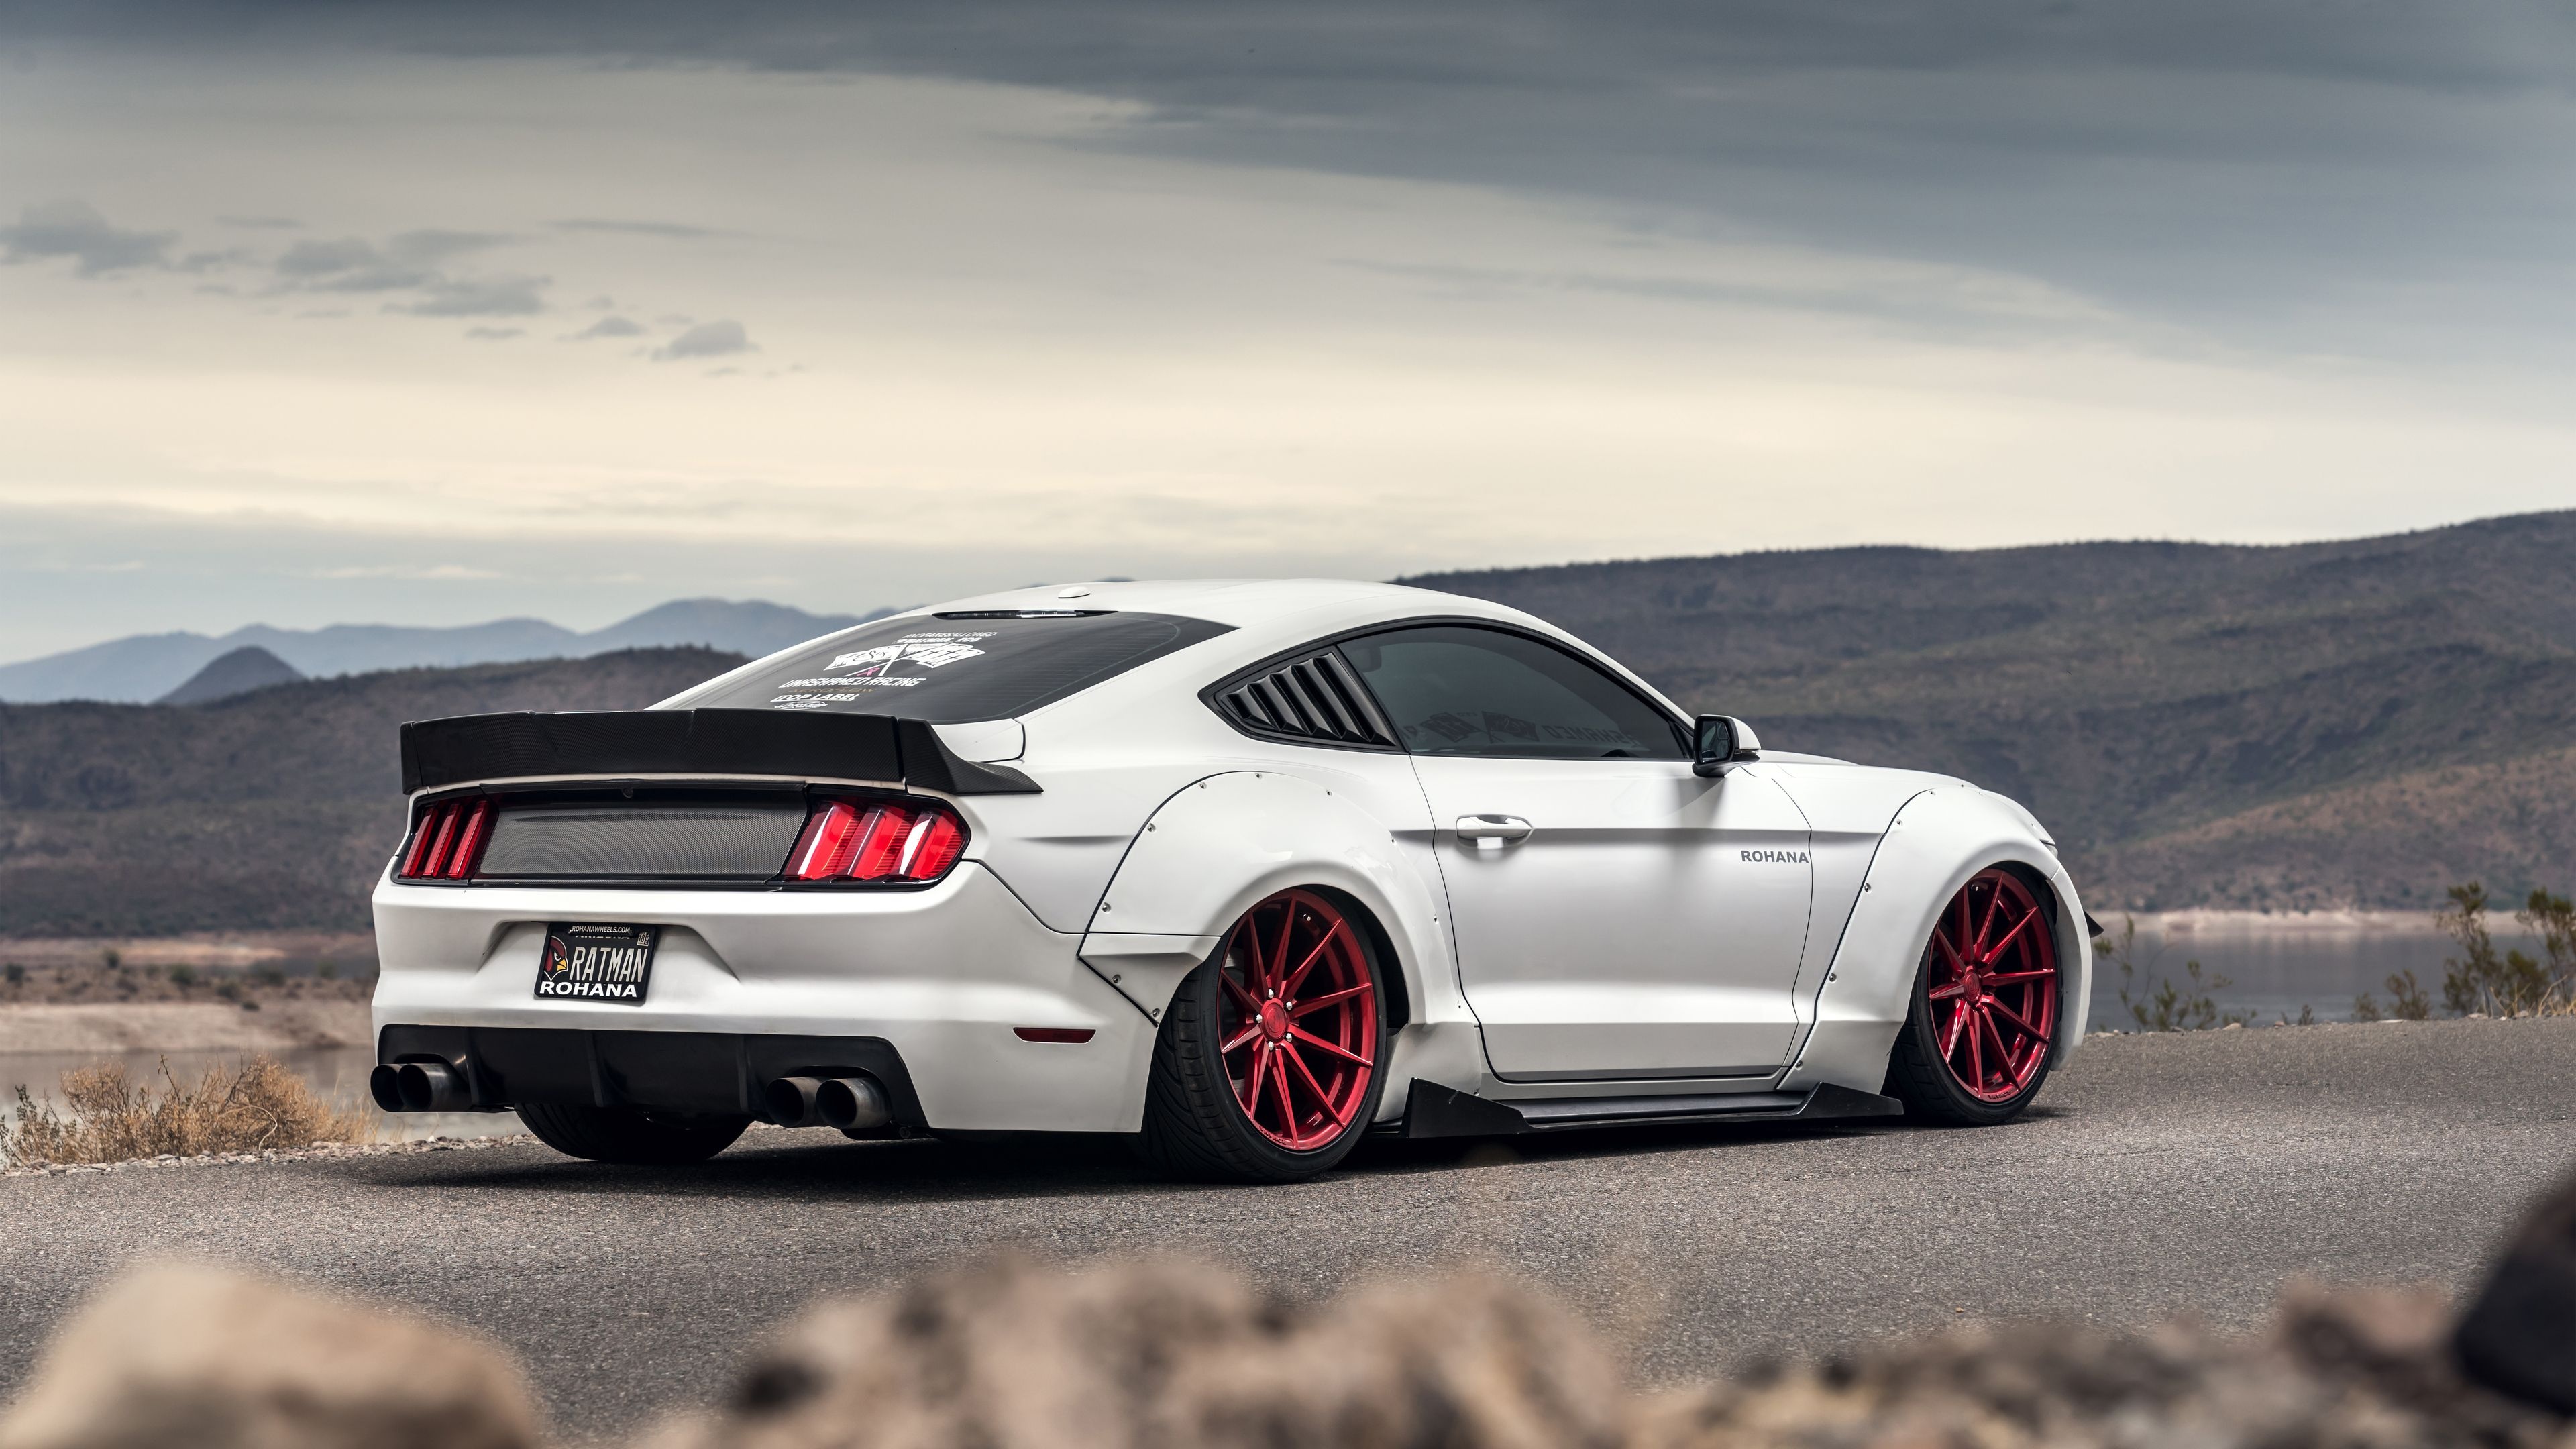 Ford Mustang GT, Sharp 4k detail, Modern muscle, V8 roar, Athletic build, 3840x2160 4K Desktop